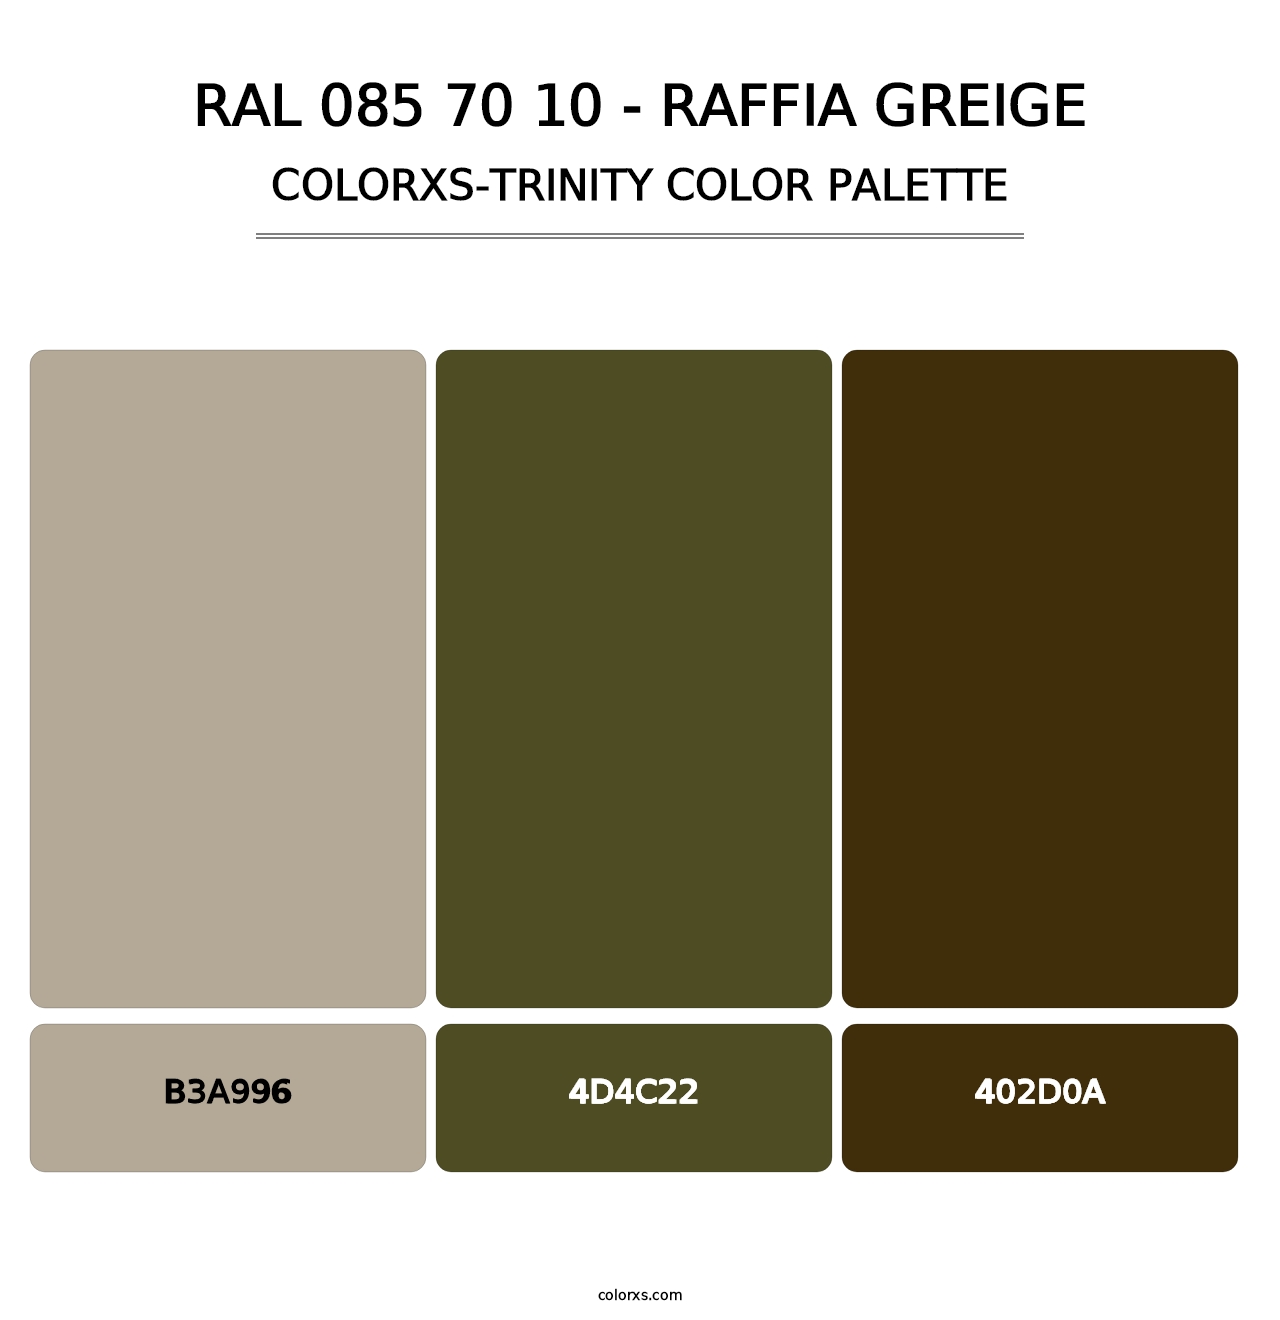 RAL 085 70 10 - Raffia Greige - Colorxs Trinity Palette